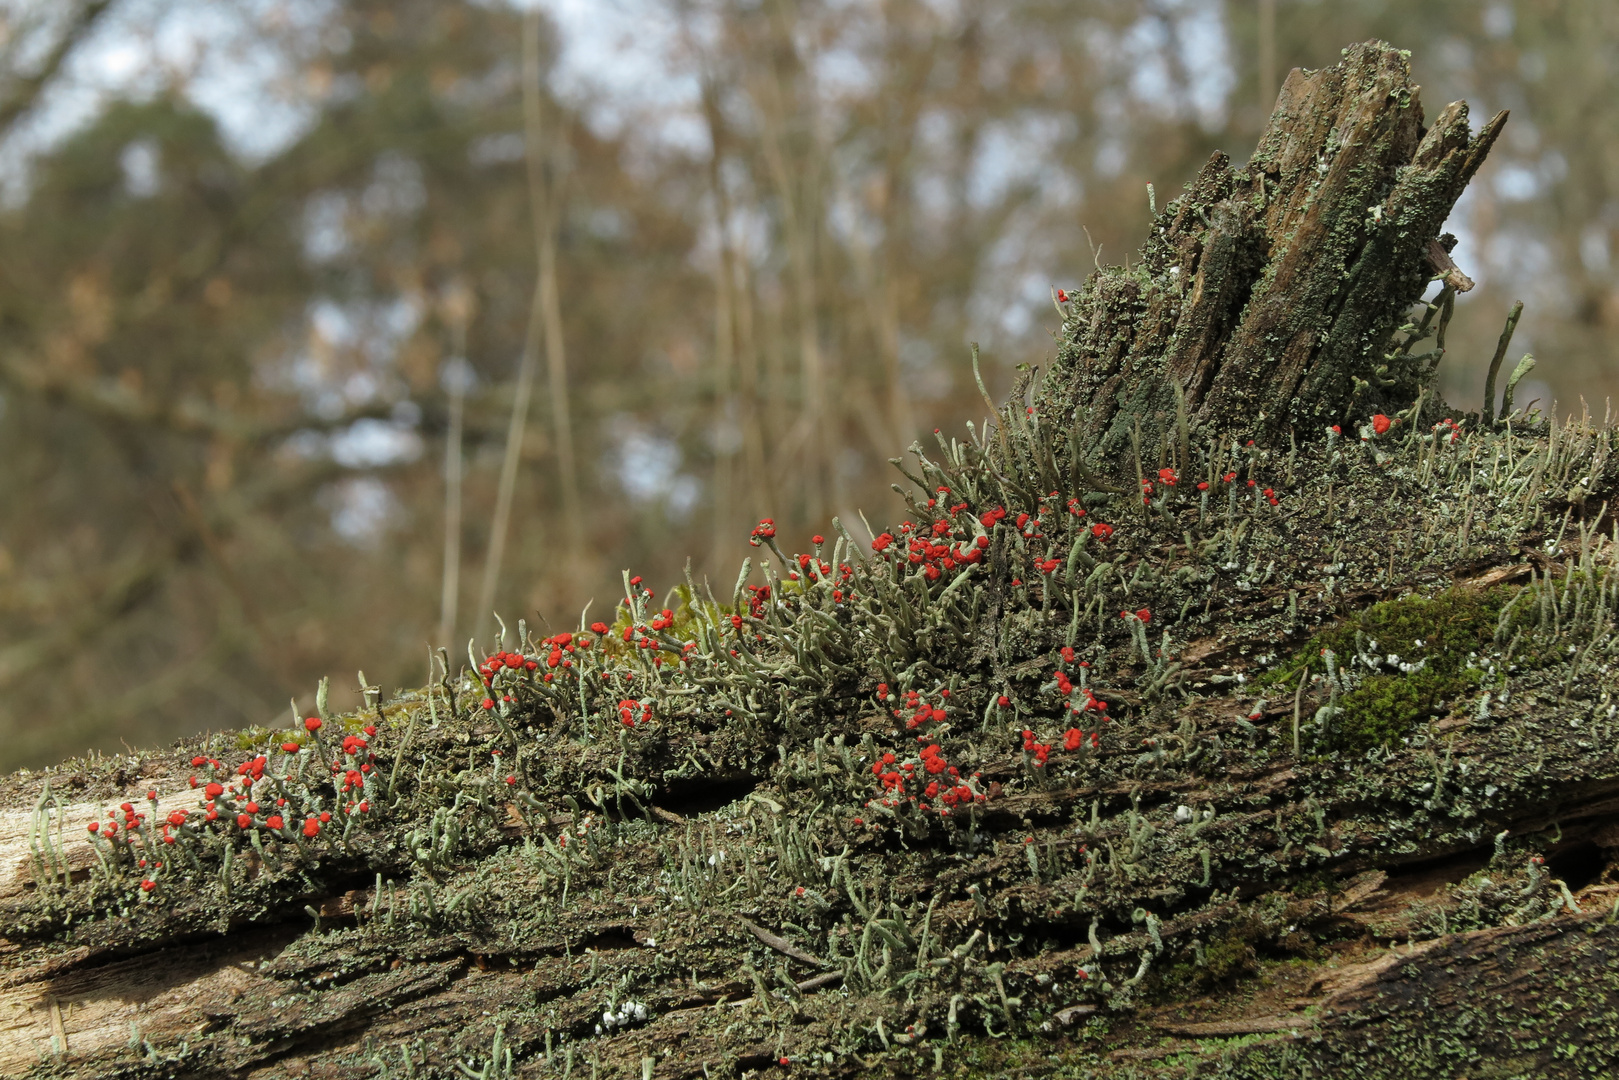 Colony of British soldier lichen (Cladonia cristatella) with amazing red fungus heads